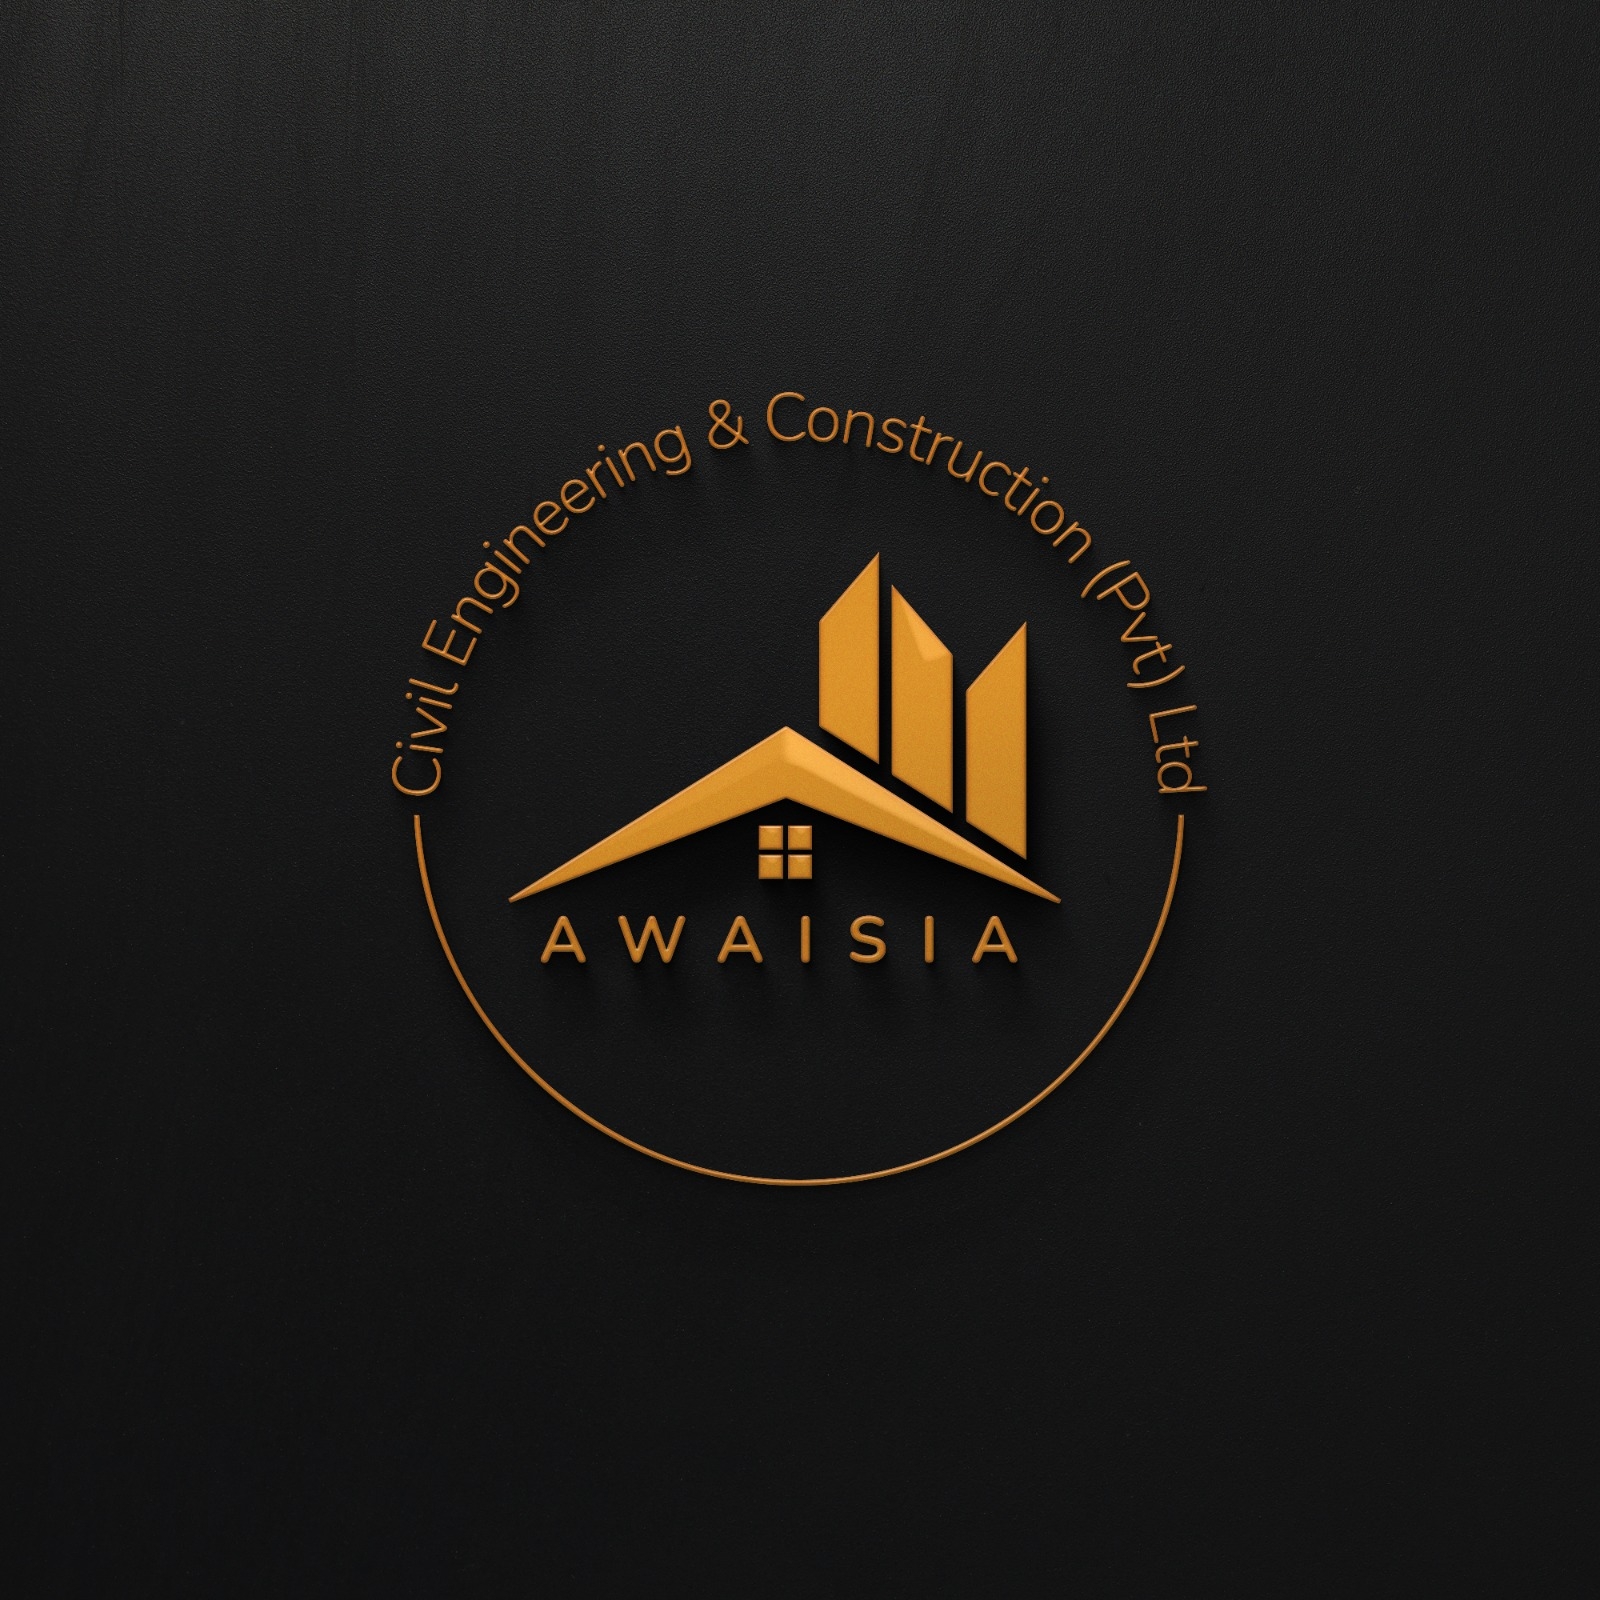 Awaisia Civil Engineering & Construction